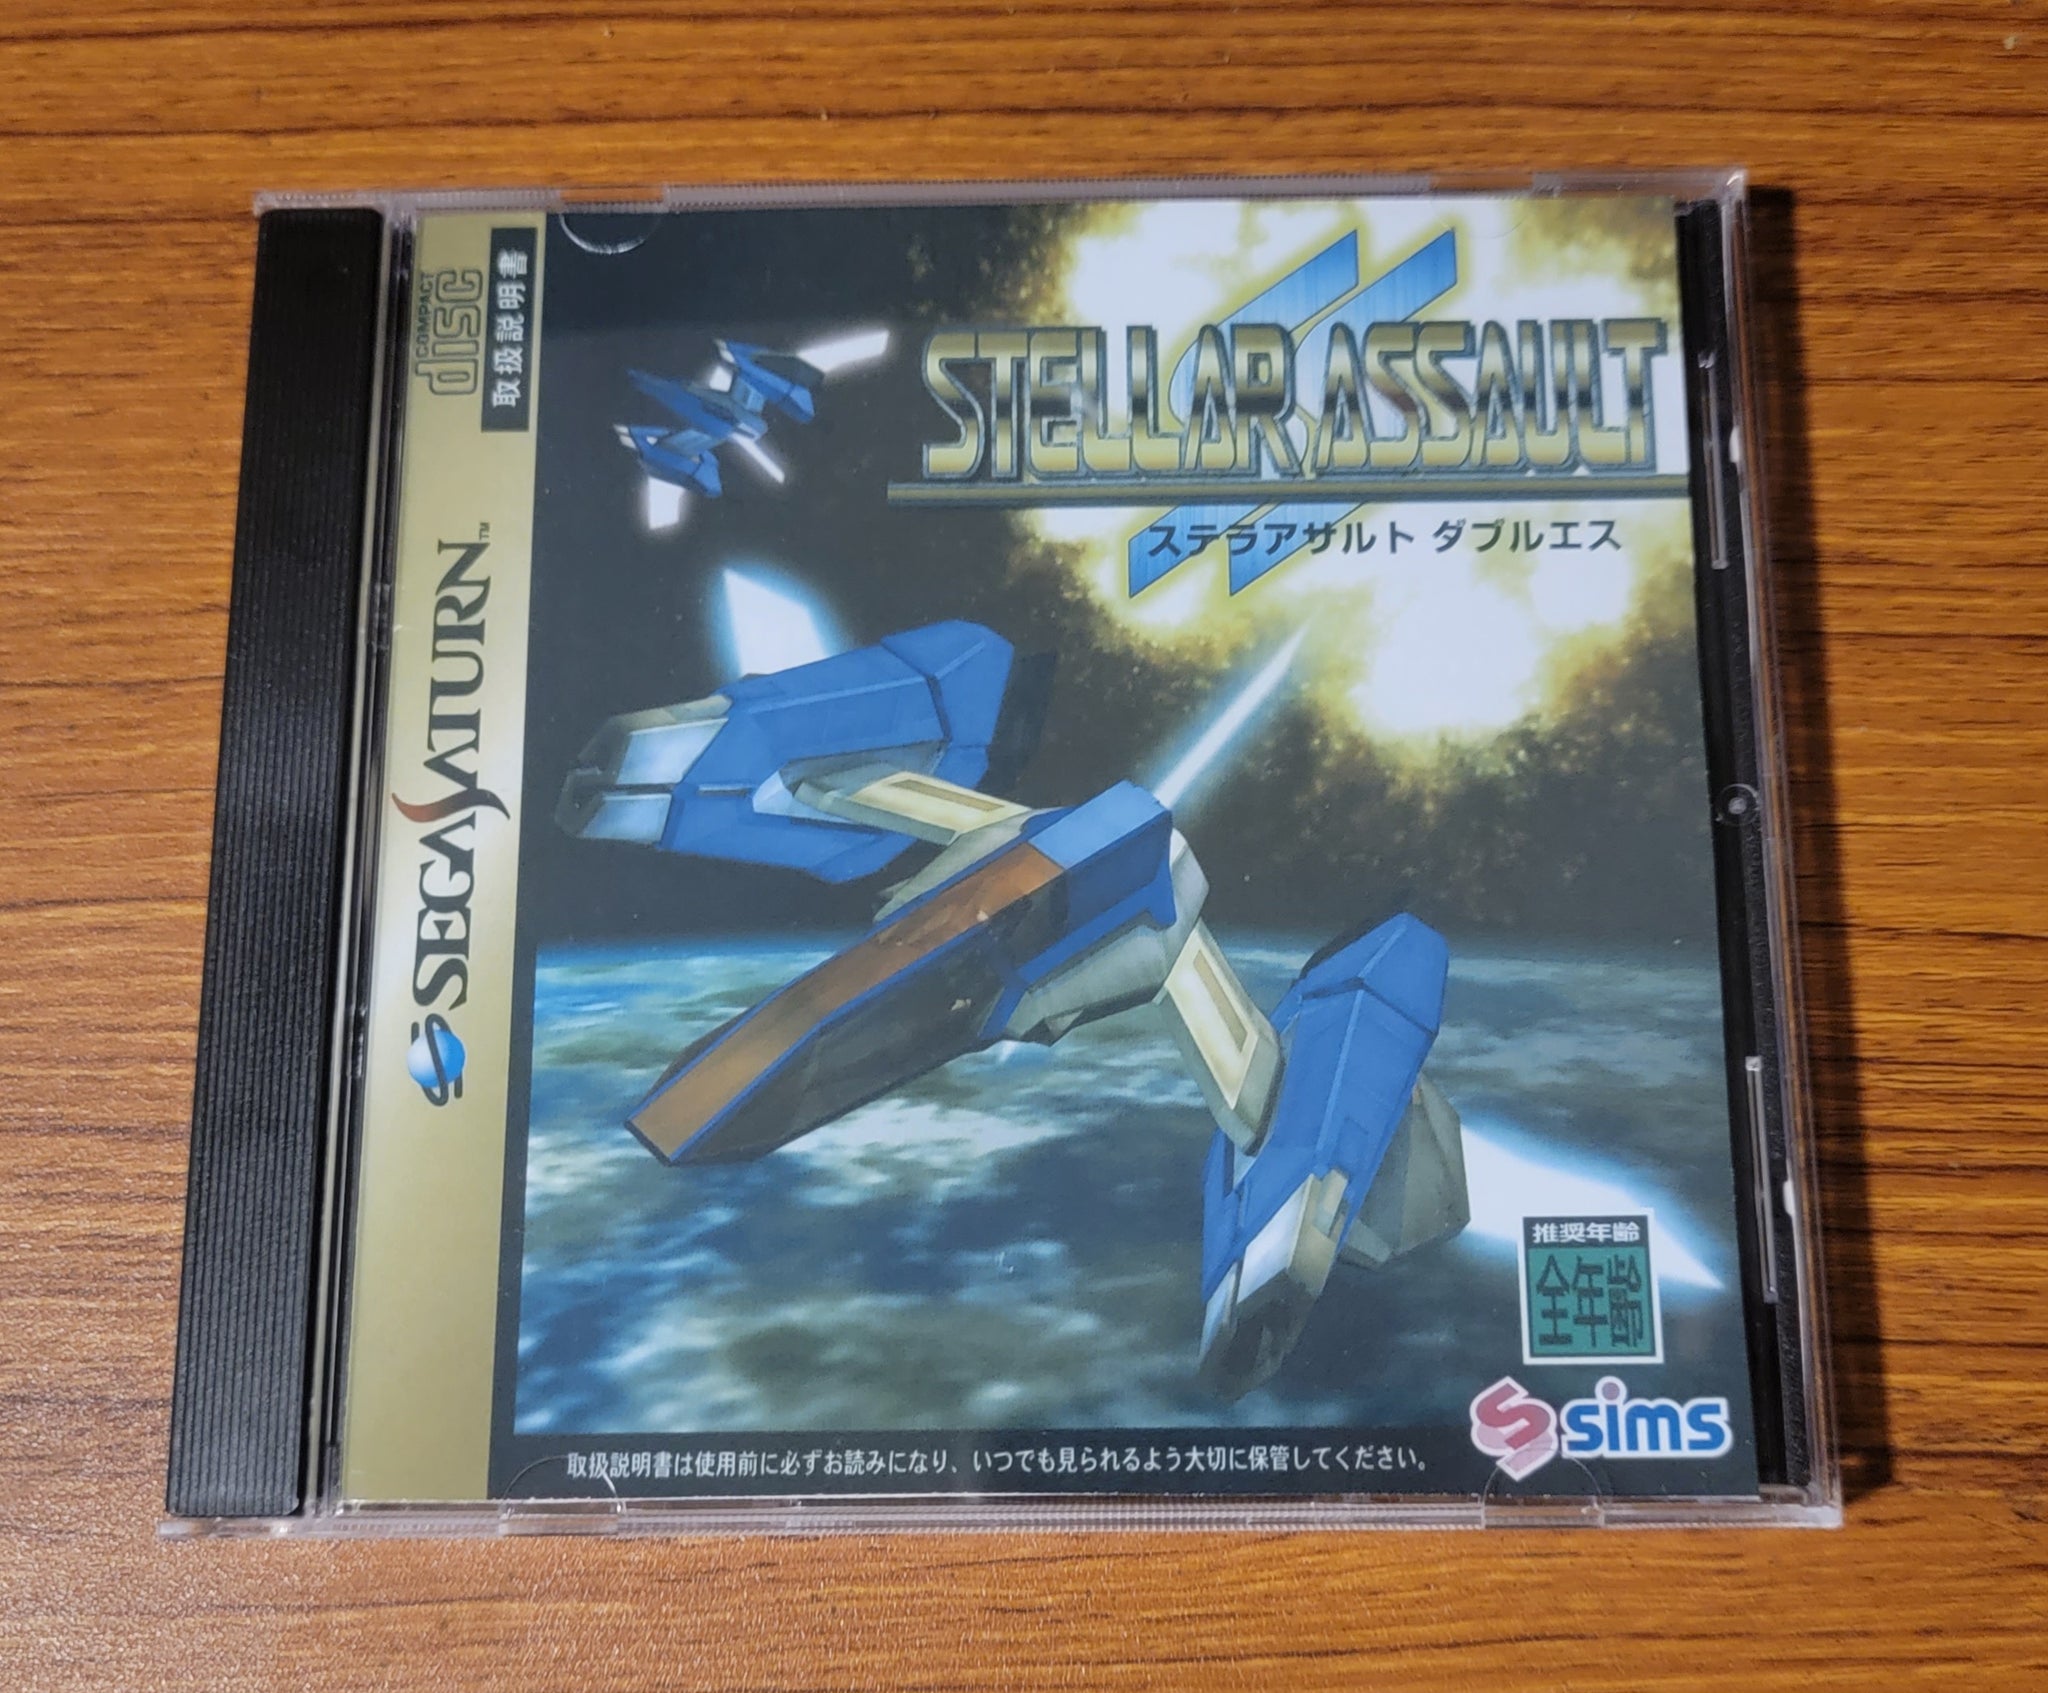 Stellar Assault Sega Saturn Reproduction